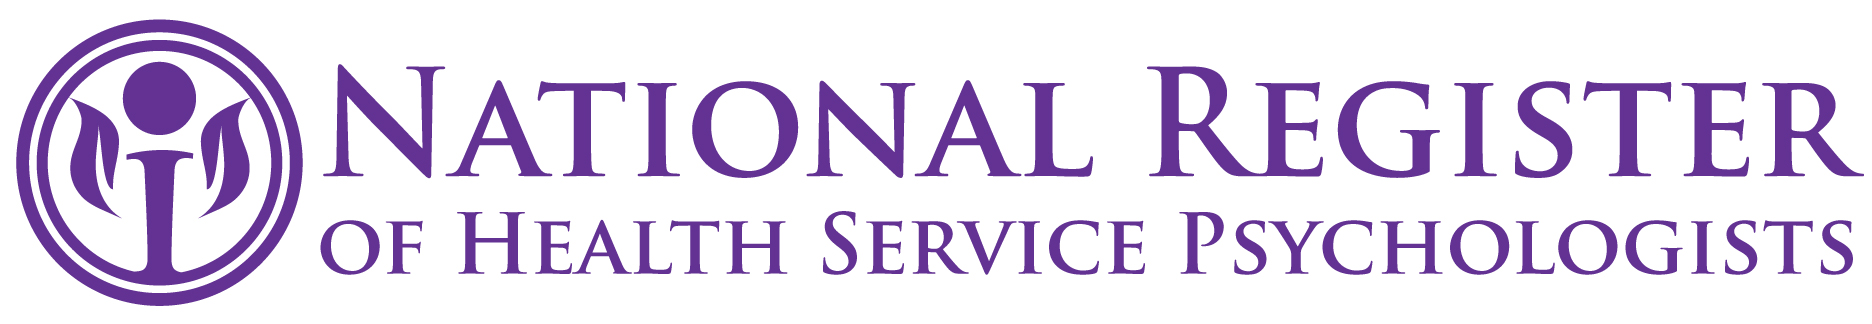 National Register of Health Service Psychologists